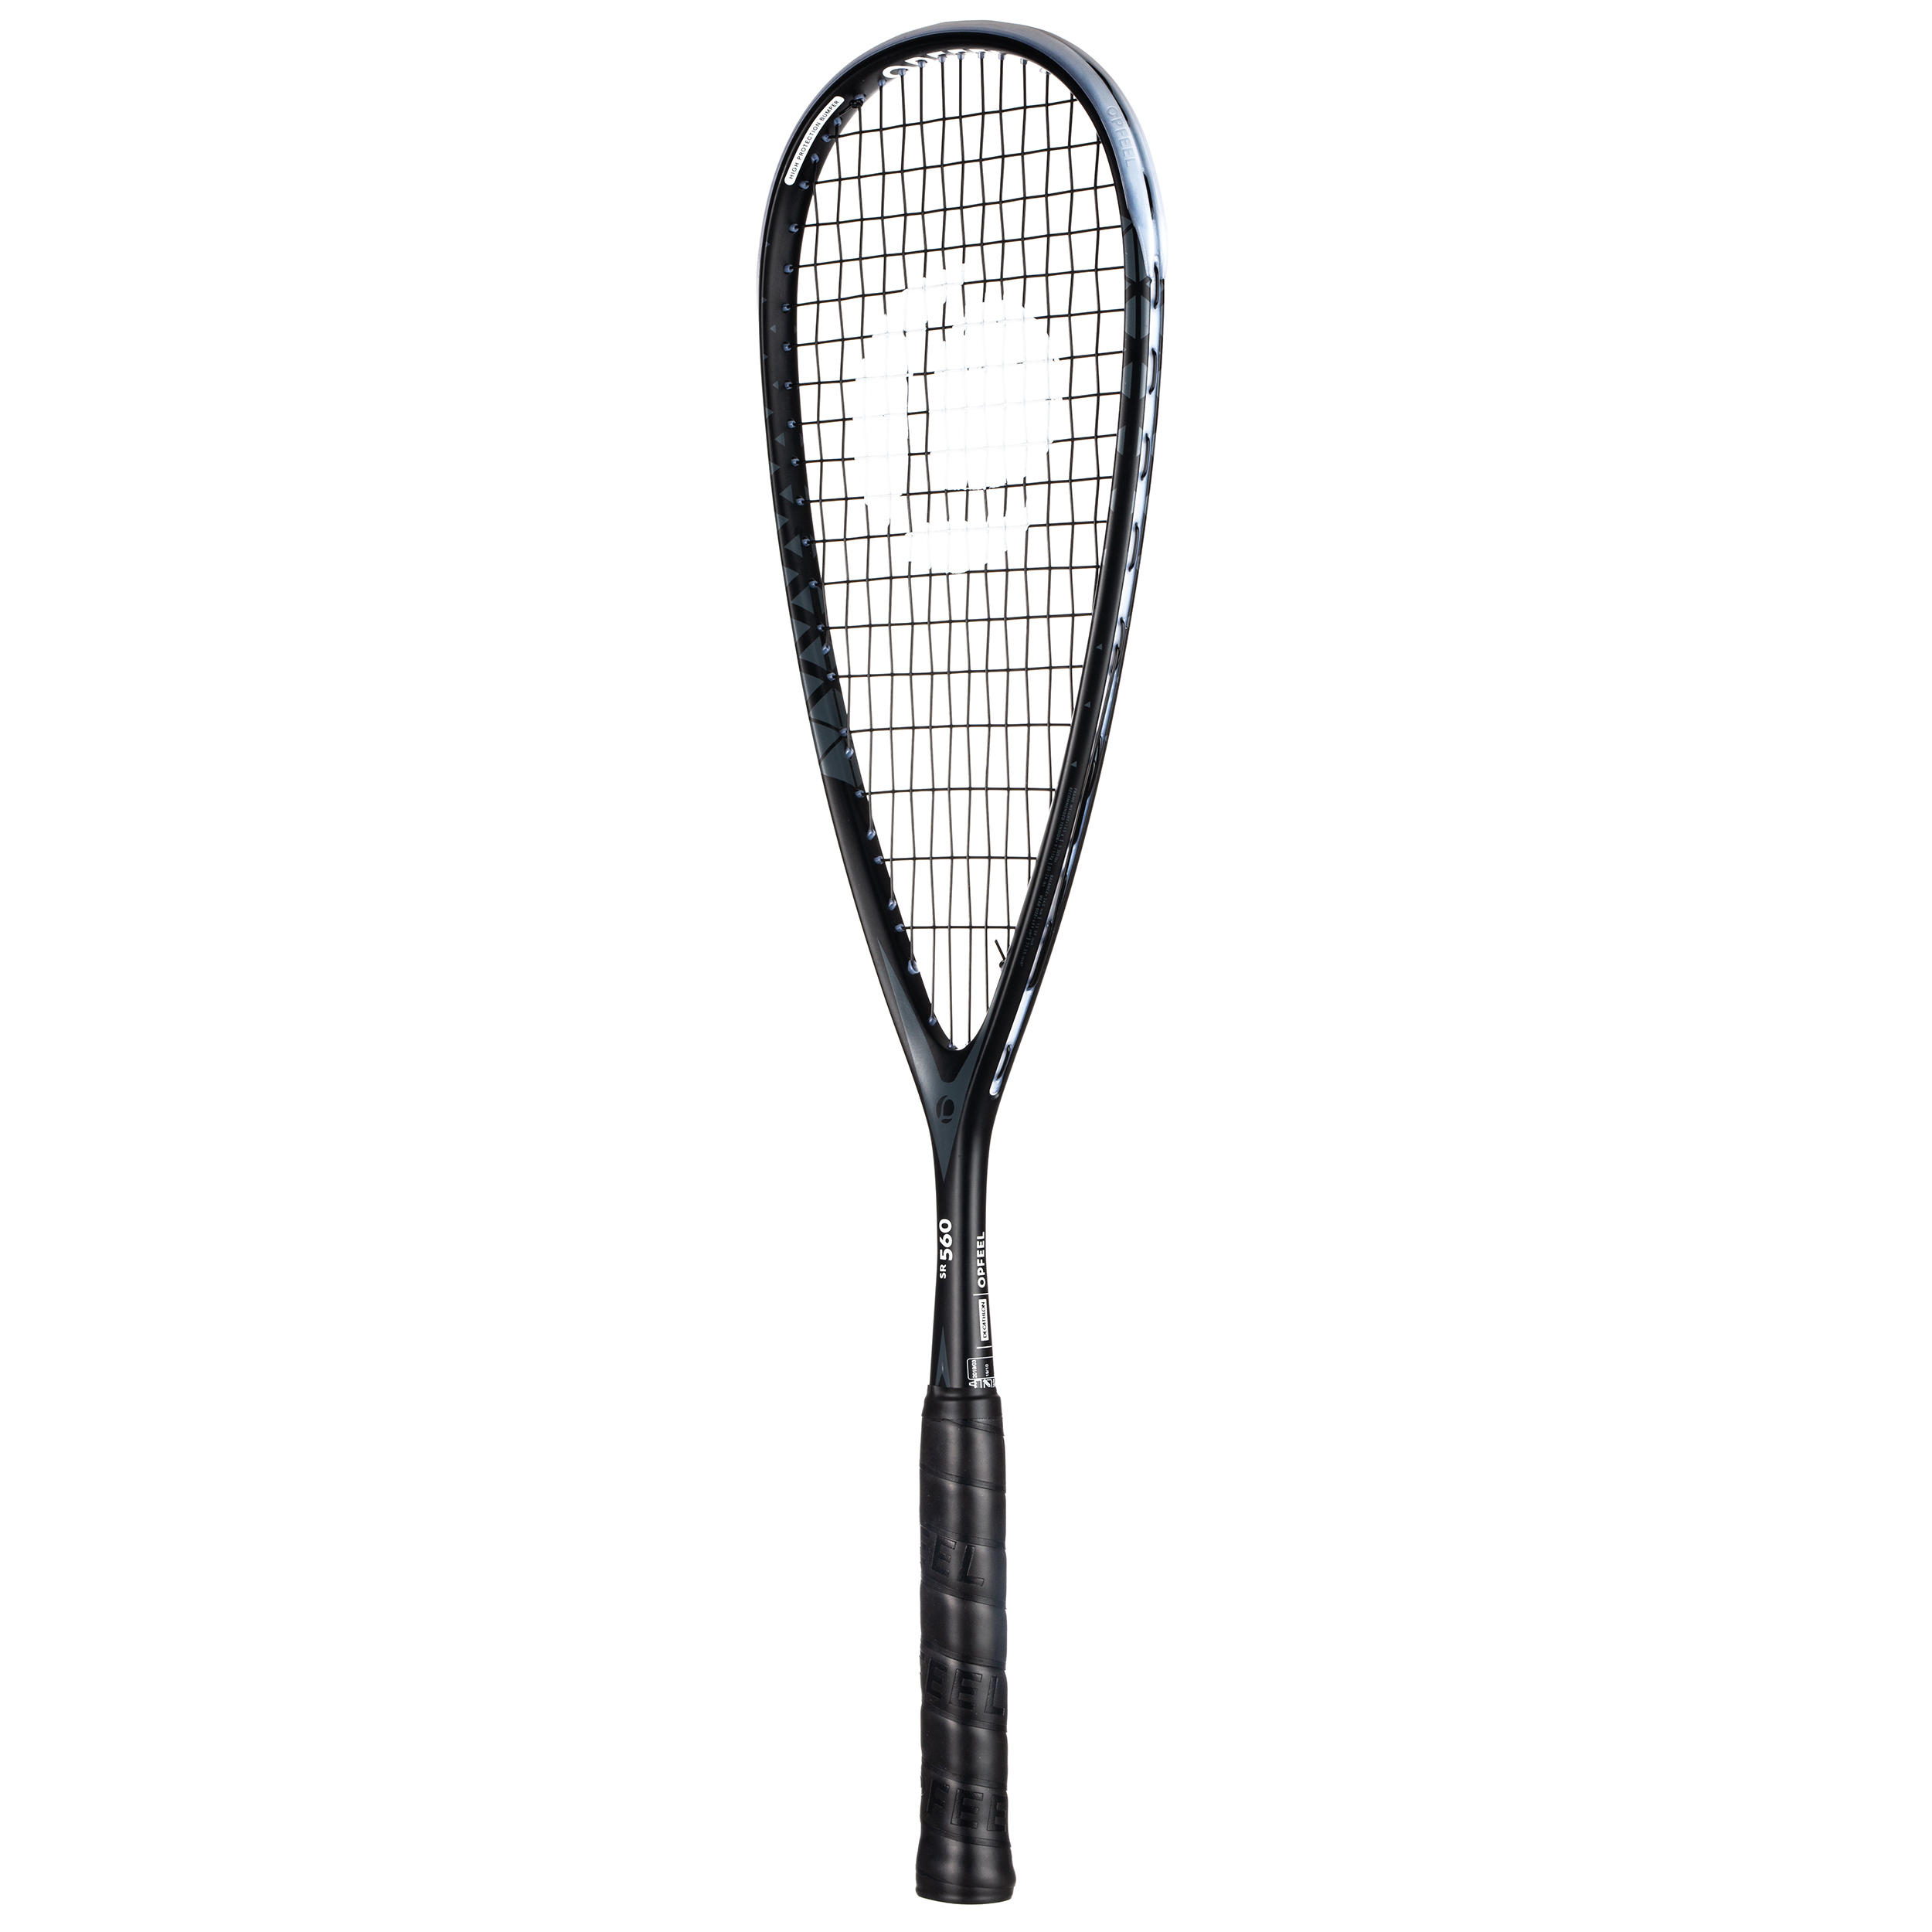 Adult Squash Racket SR560 - No Size By OPFEEL | Decathlon